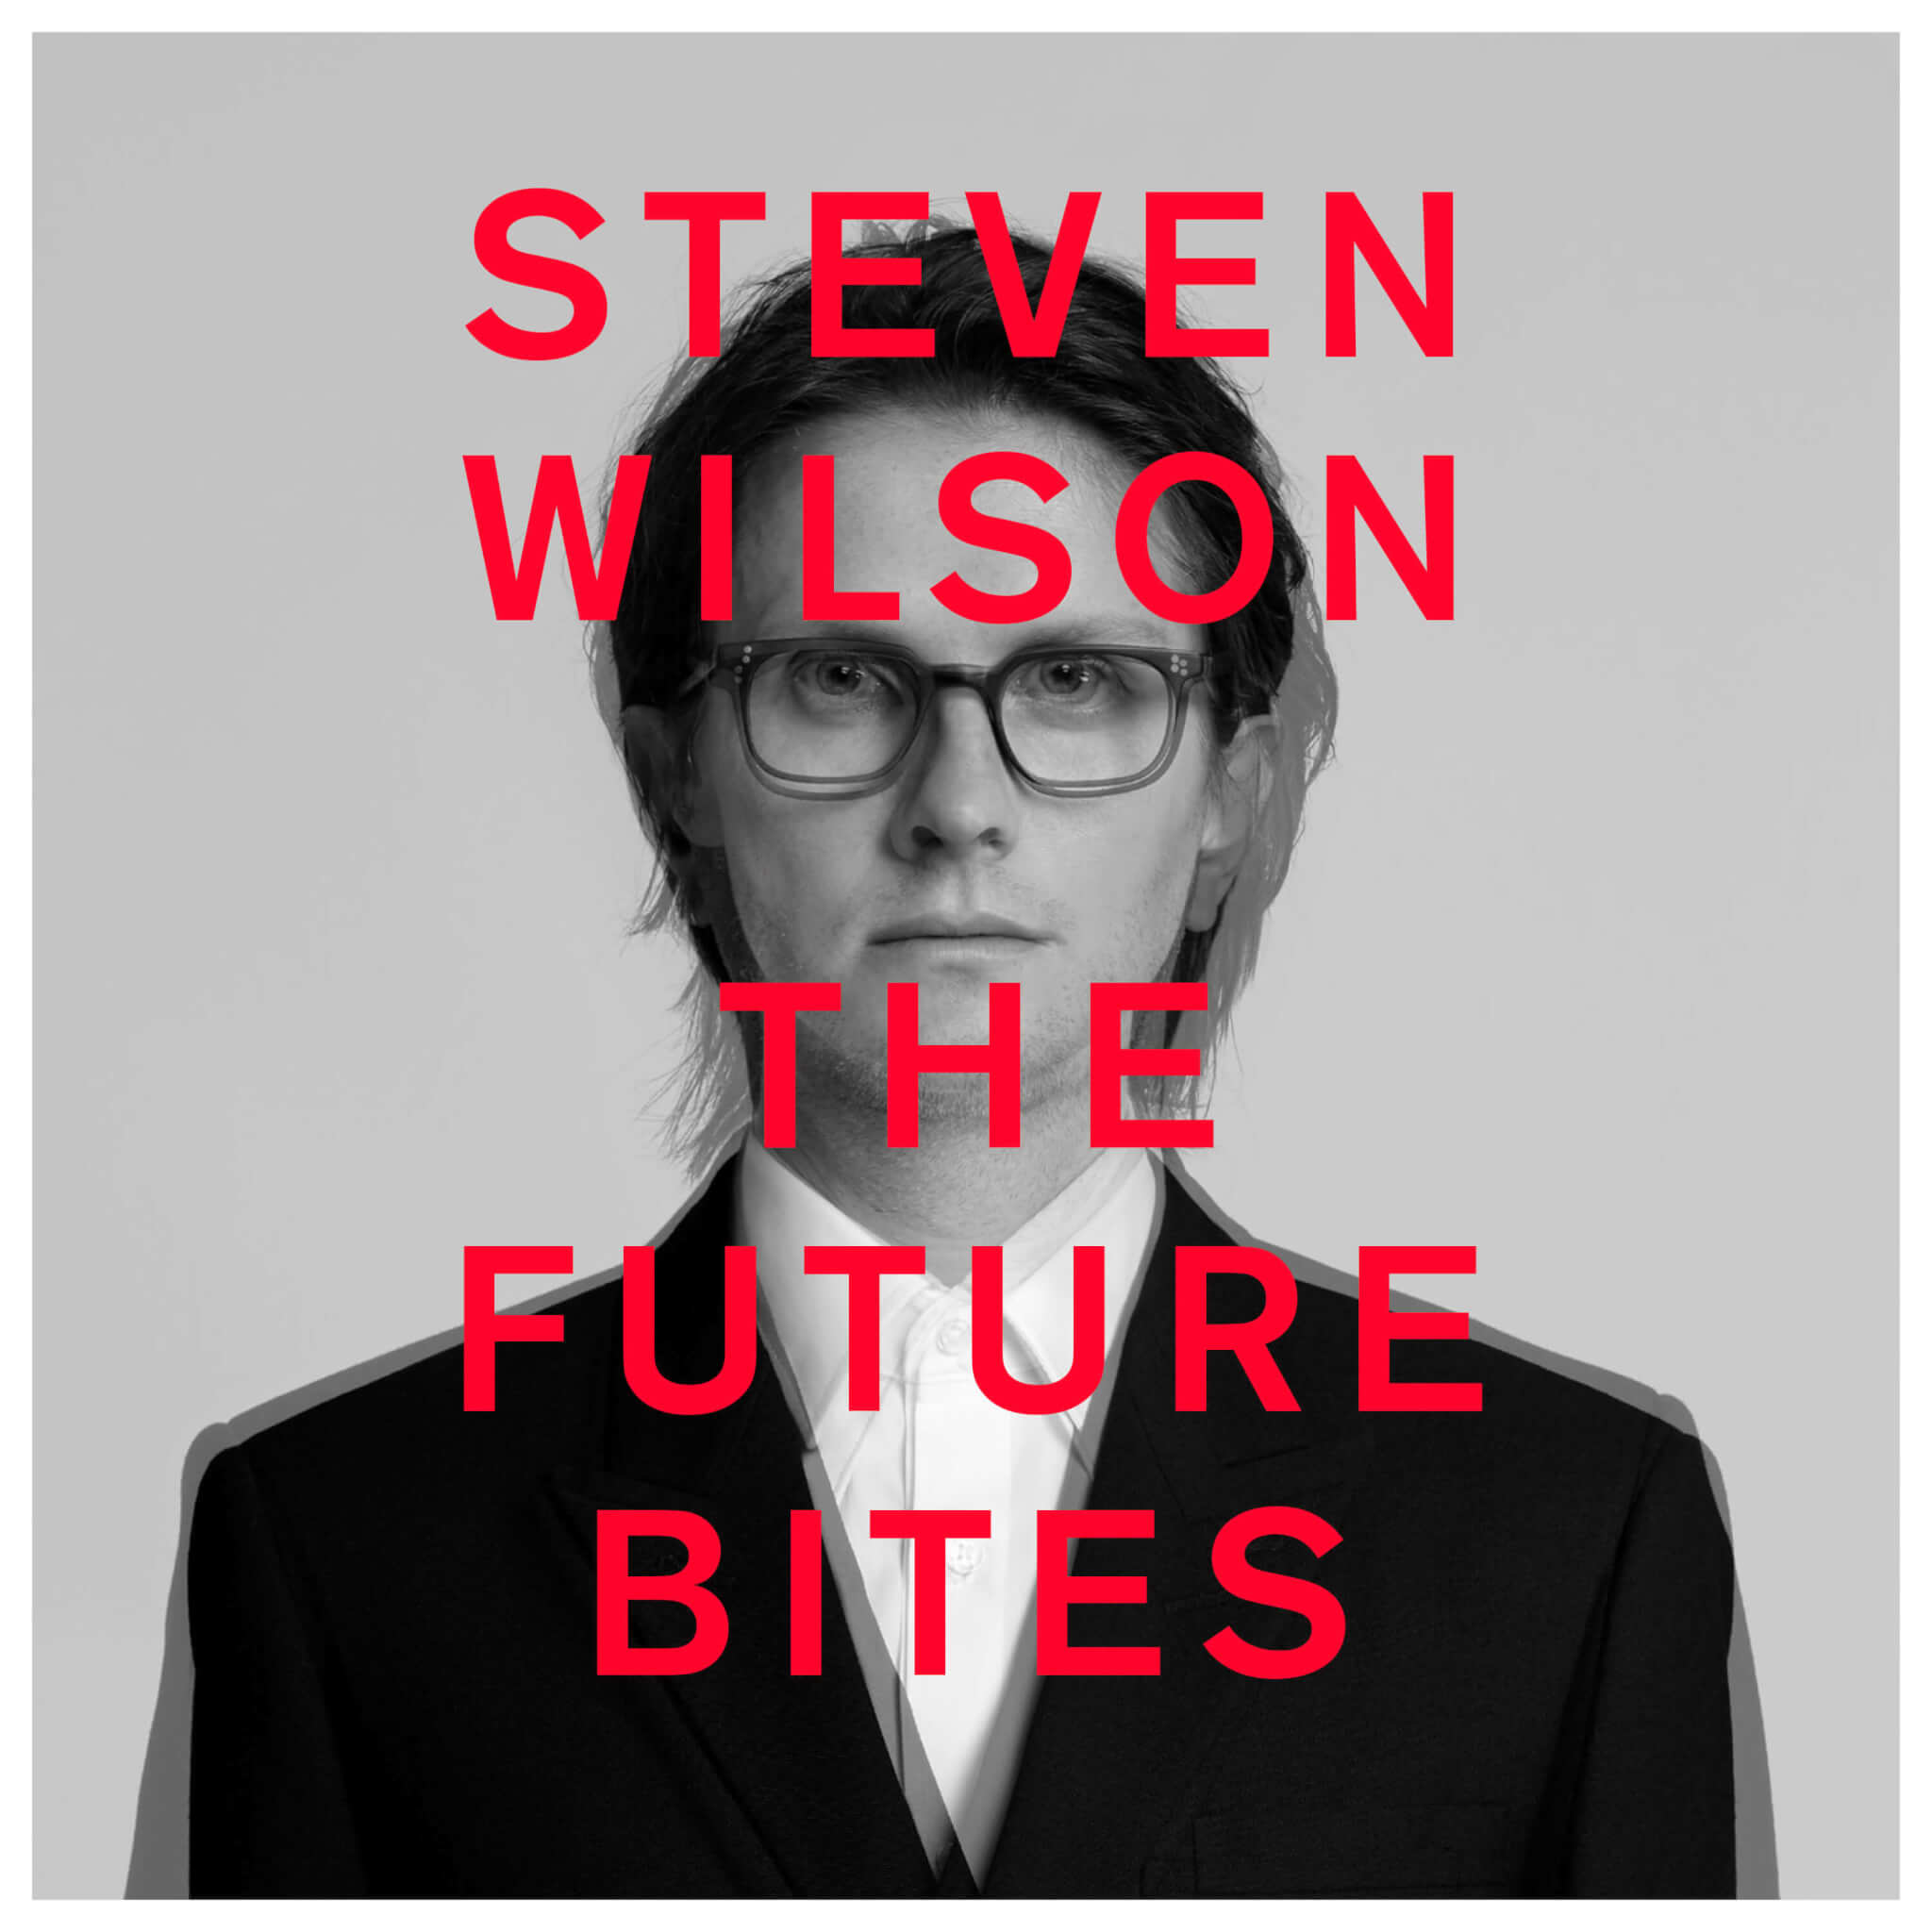 STEVEN WILSON - The Future Bites - LP - Limited Red Vinyl